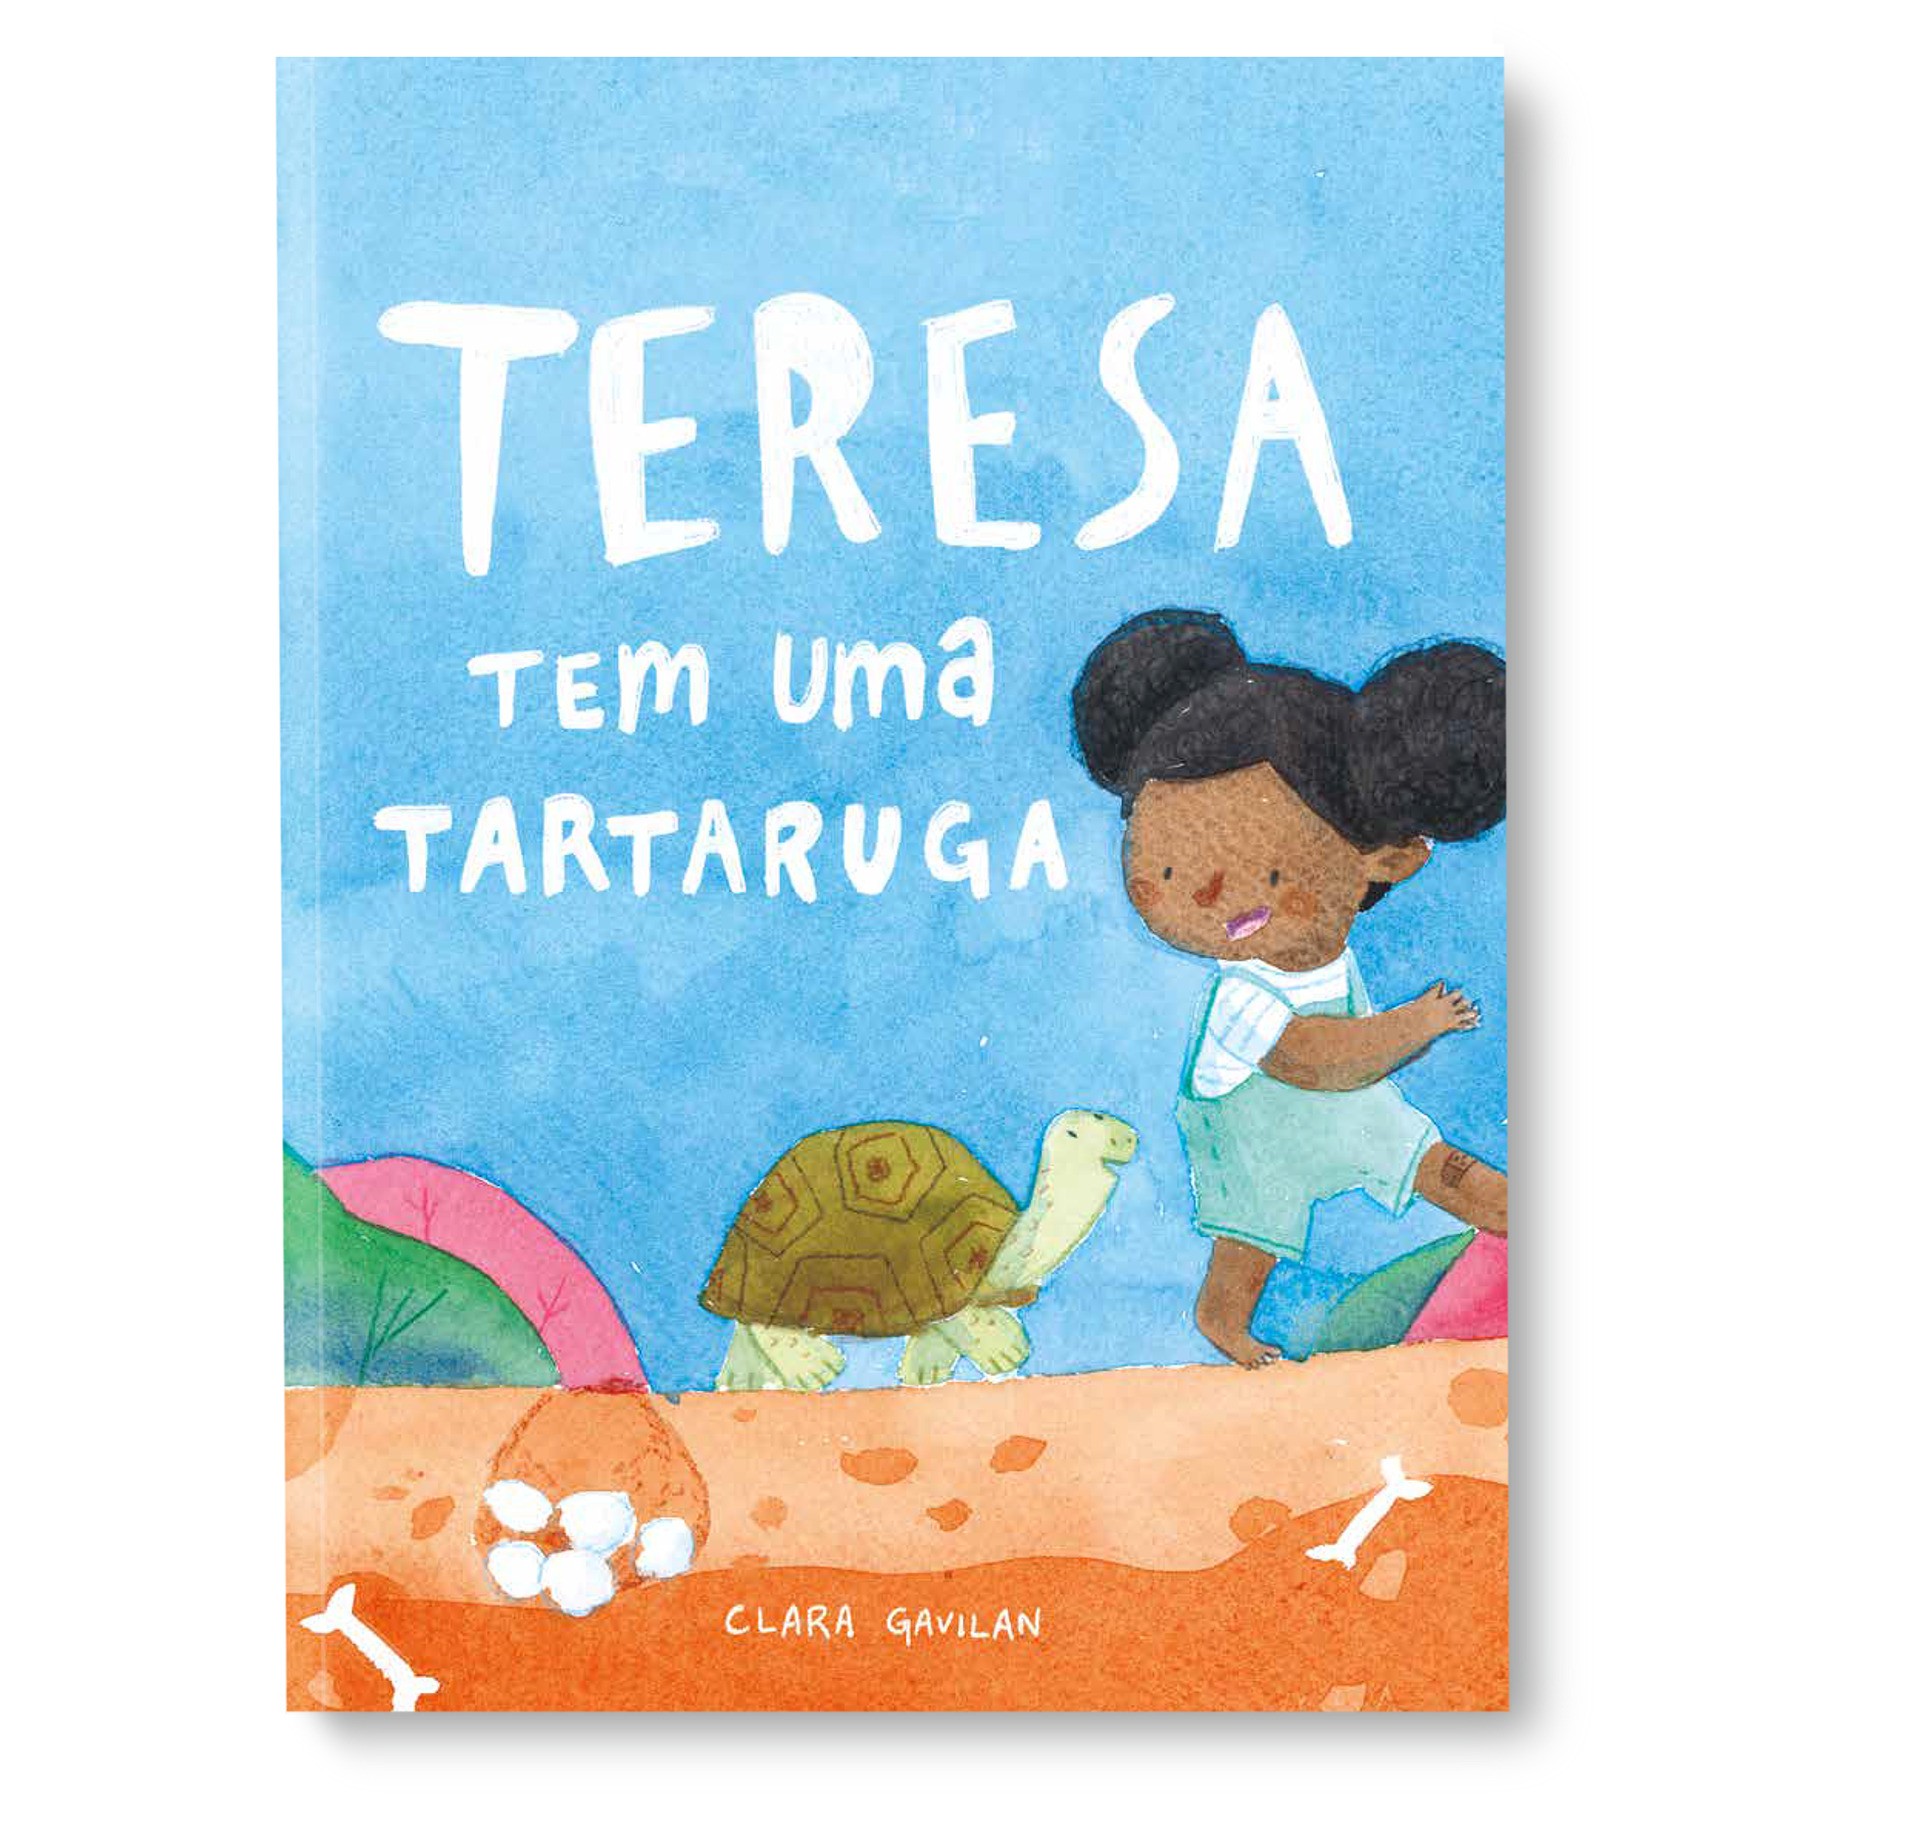 Teresa tem uma tartaruga (Foto: Divulgação/Travessa)